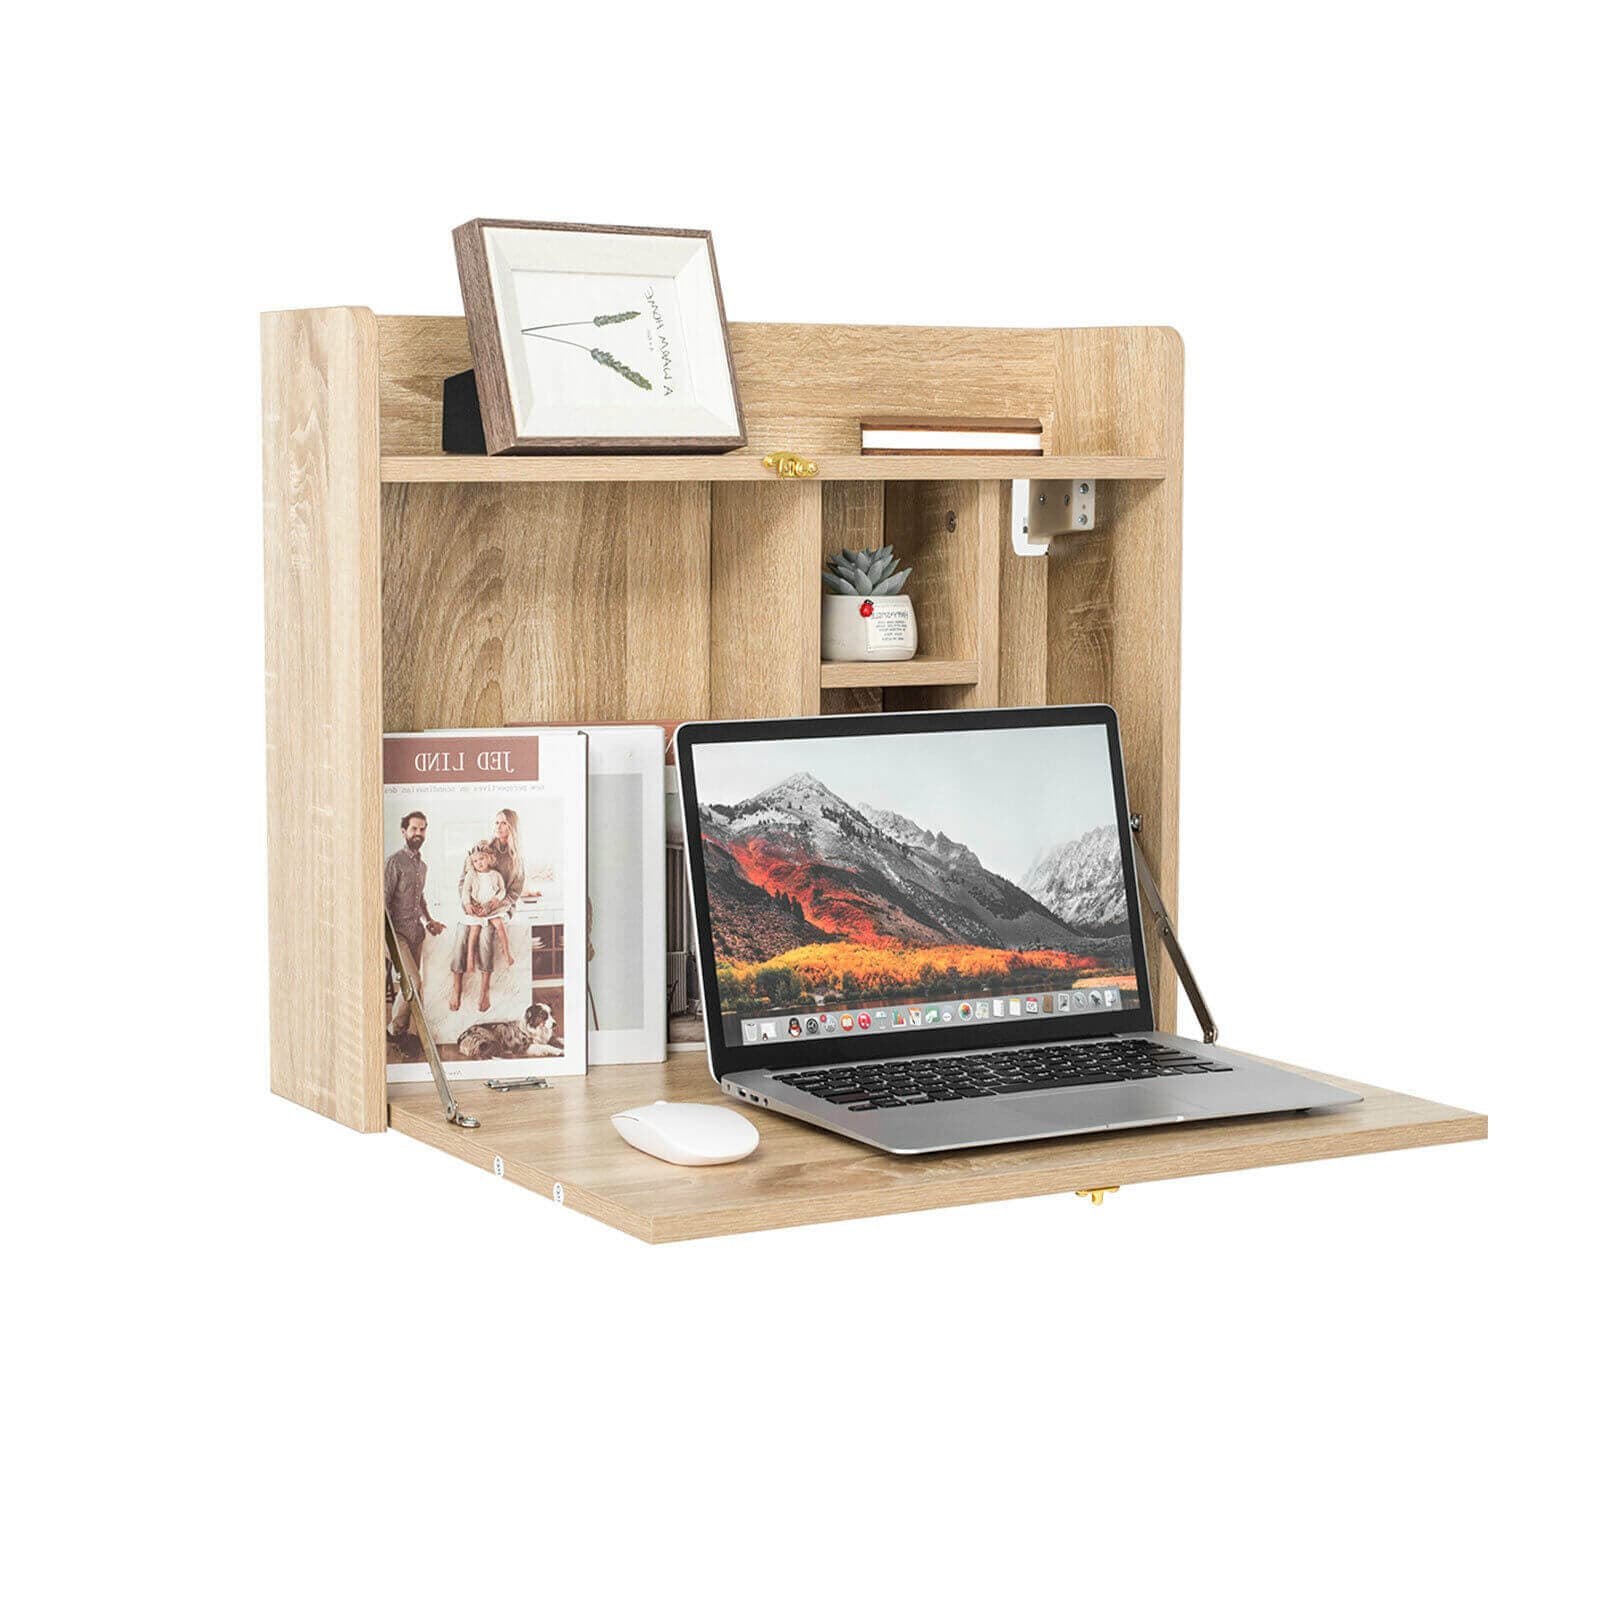 Elecwish Maple Wall Mounted Table Tan Foldable Storage Shelf Wall-Mounted Desk HW1138